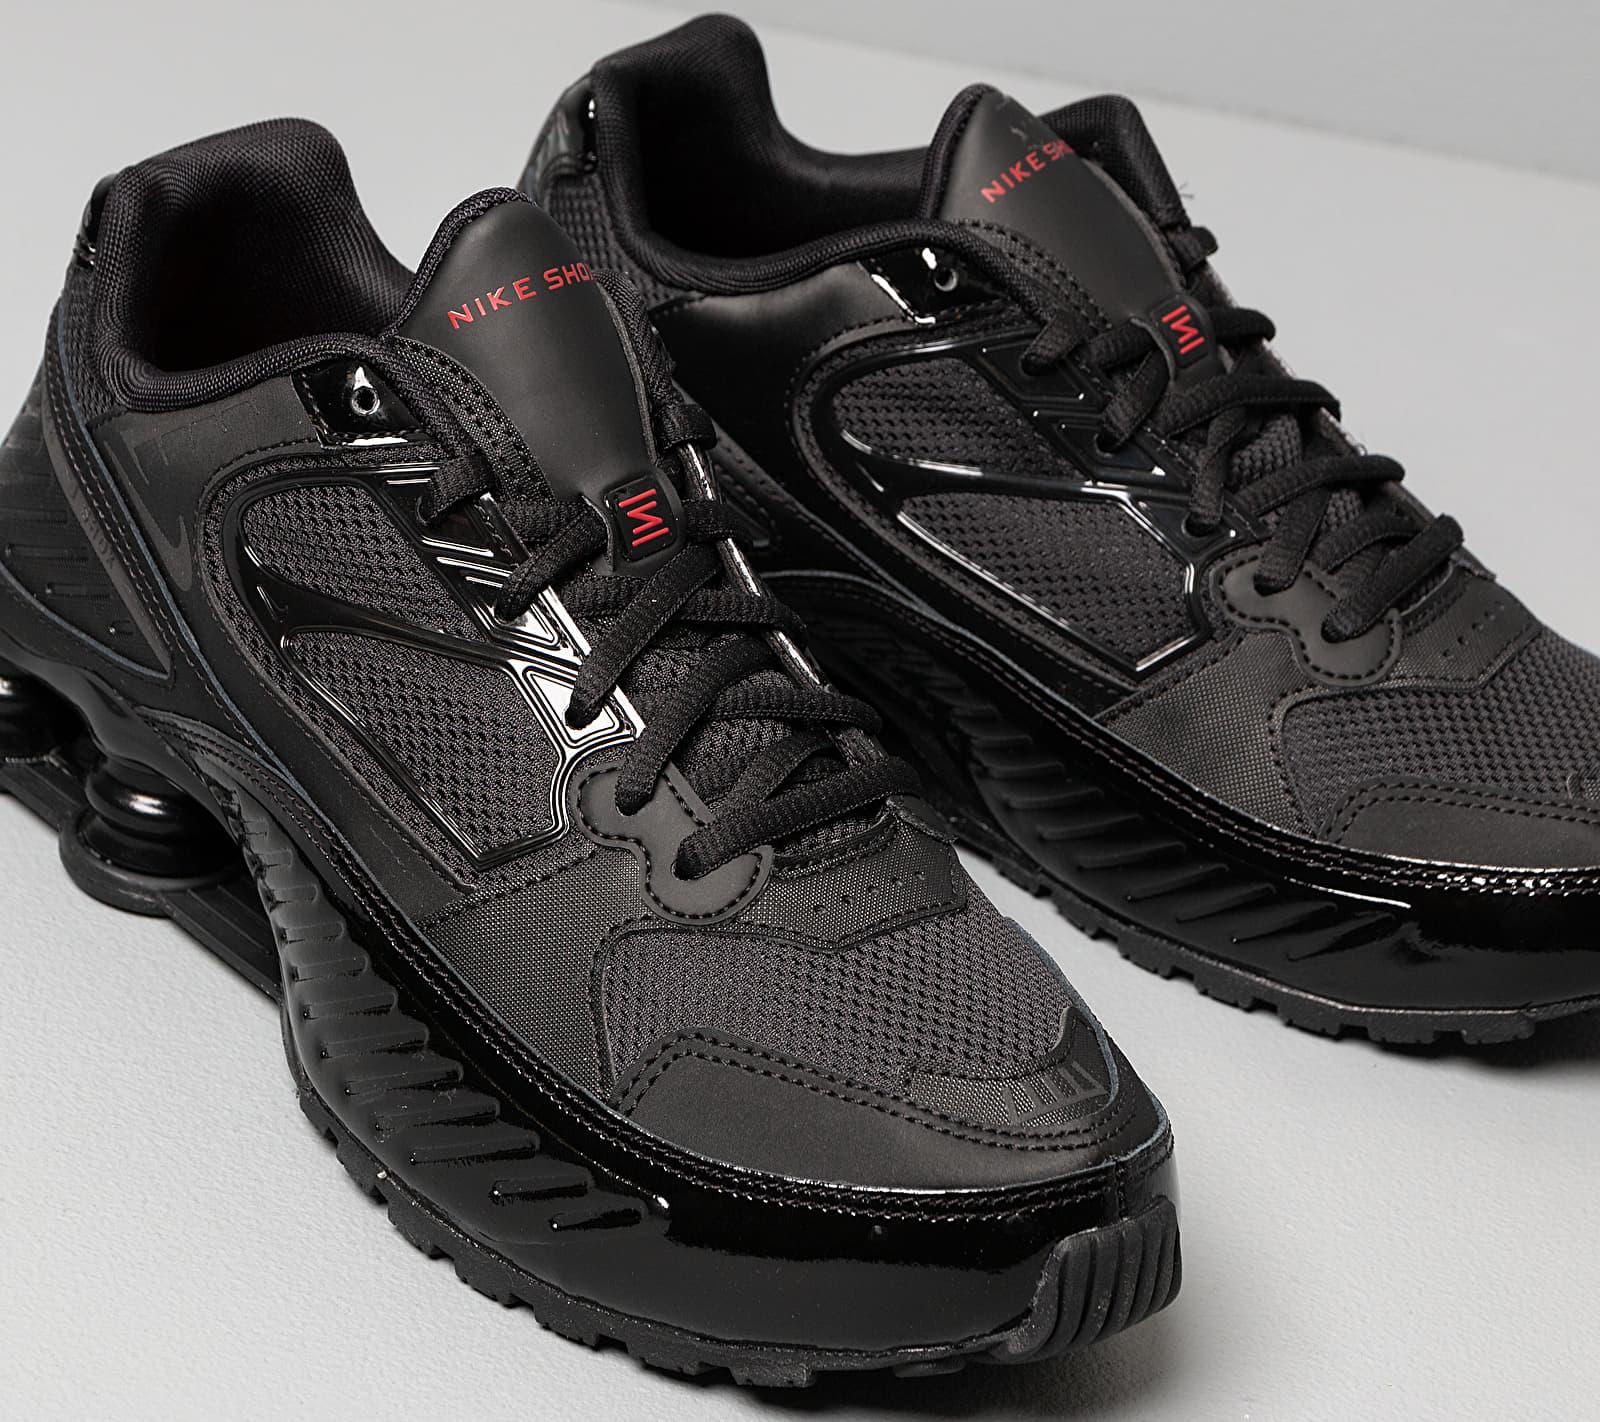 Nike Shox Enigma 9000 Shoe in Black - Save 75% | Lyst